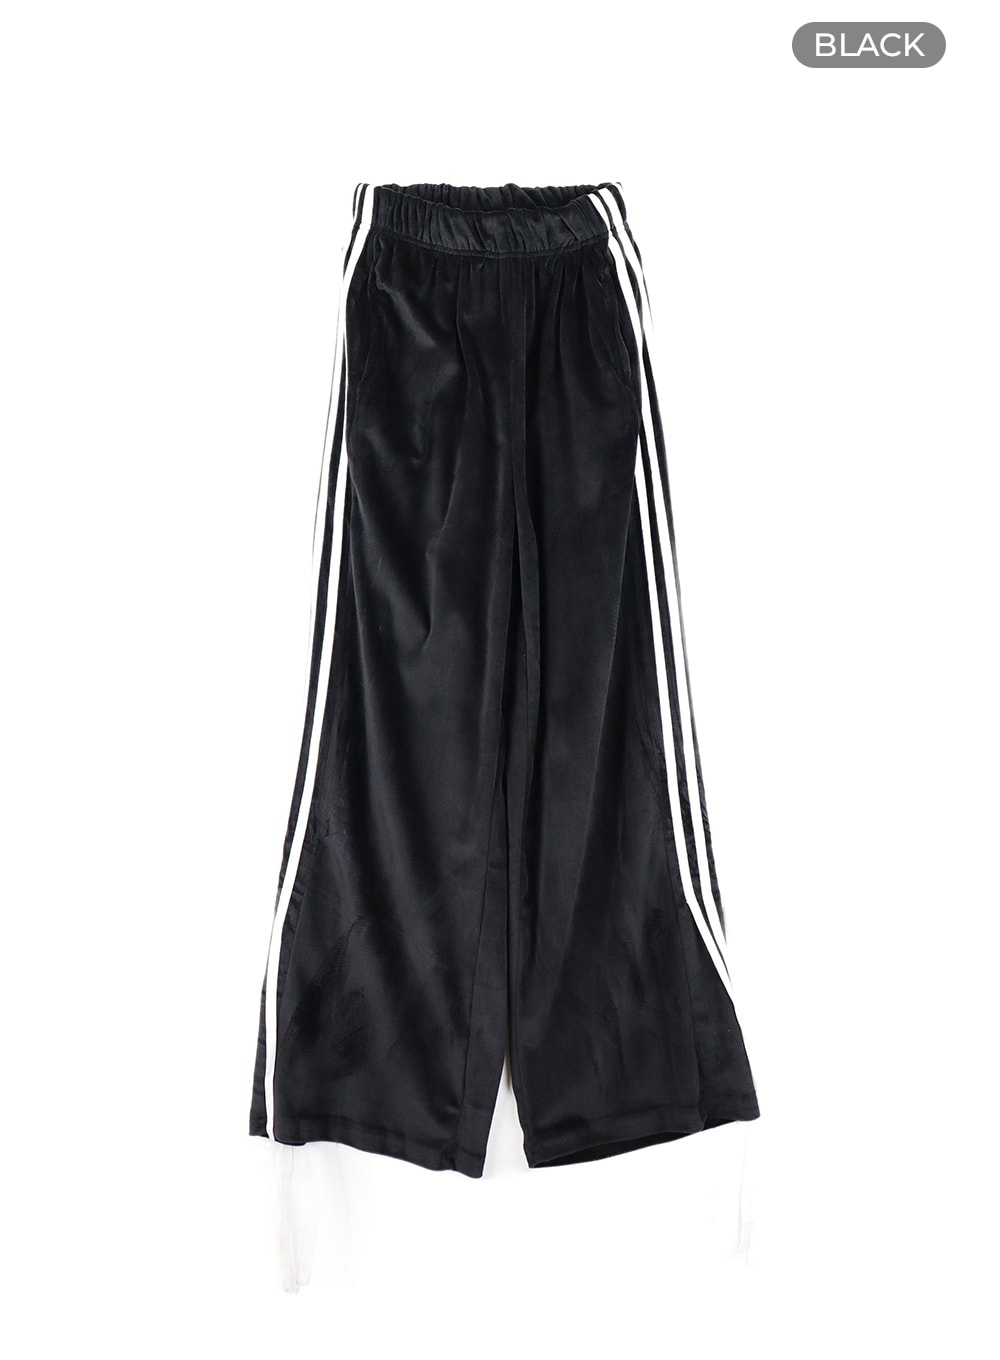 Rainbeau Curves Premier Basix Women's Black Nylon Capri Pants - Walmart.com